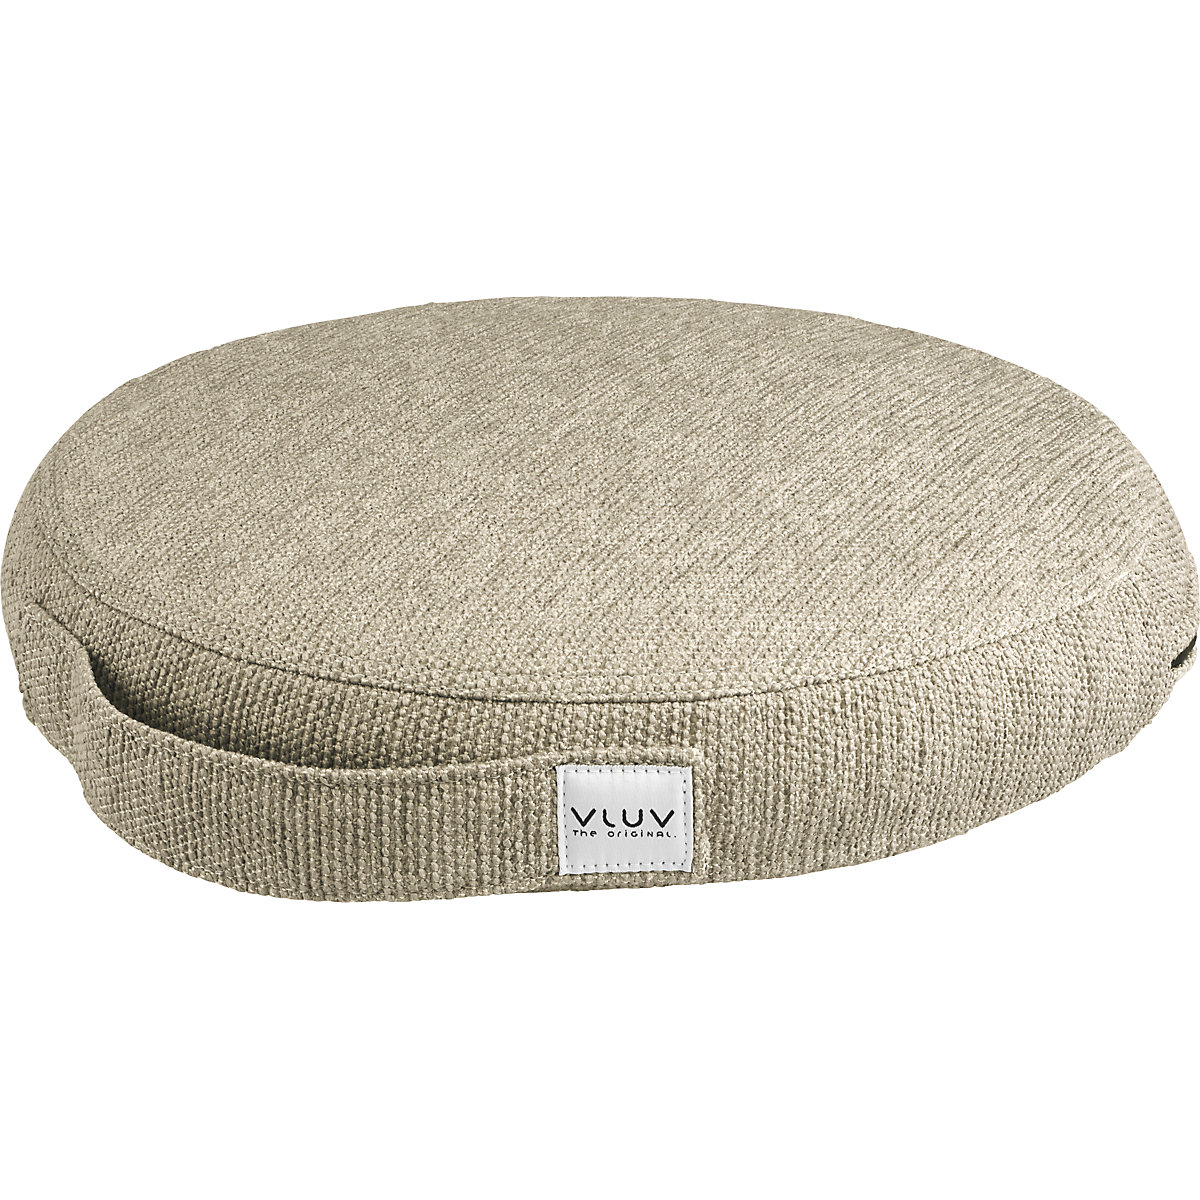 PIL&PED STOV balance cushion – VLUV, with fabric cover, Ø 360 mm, pebble grey